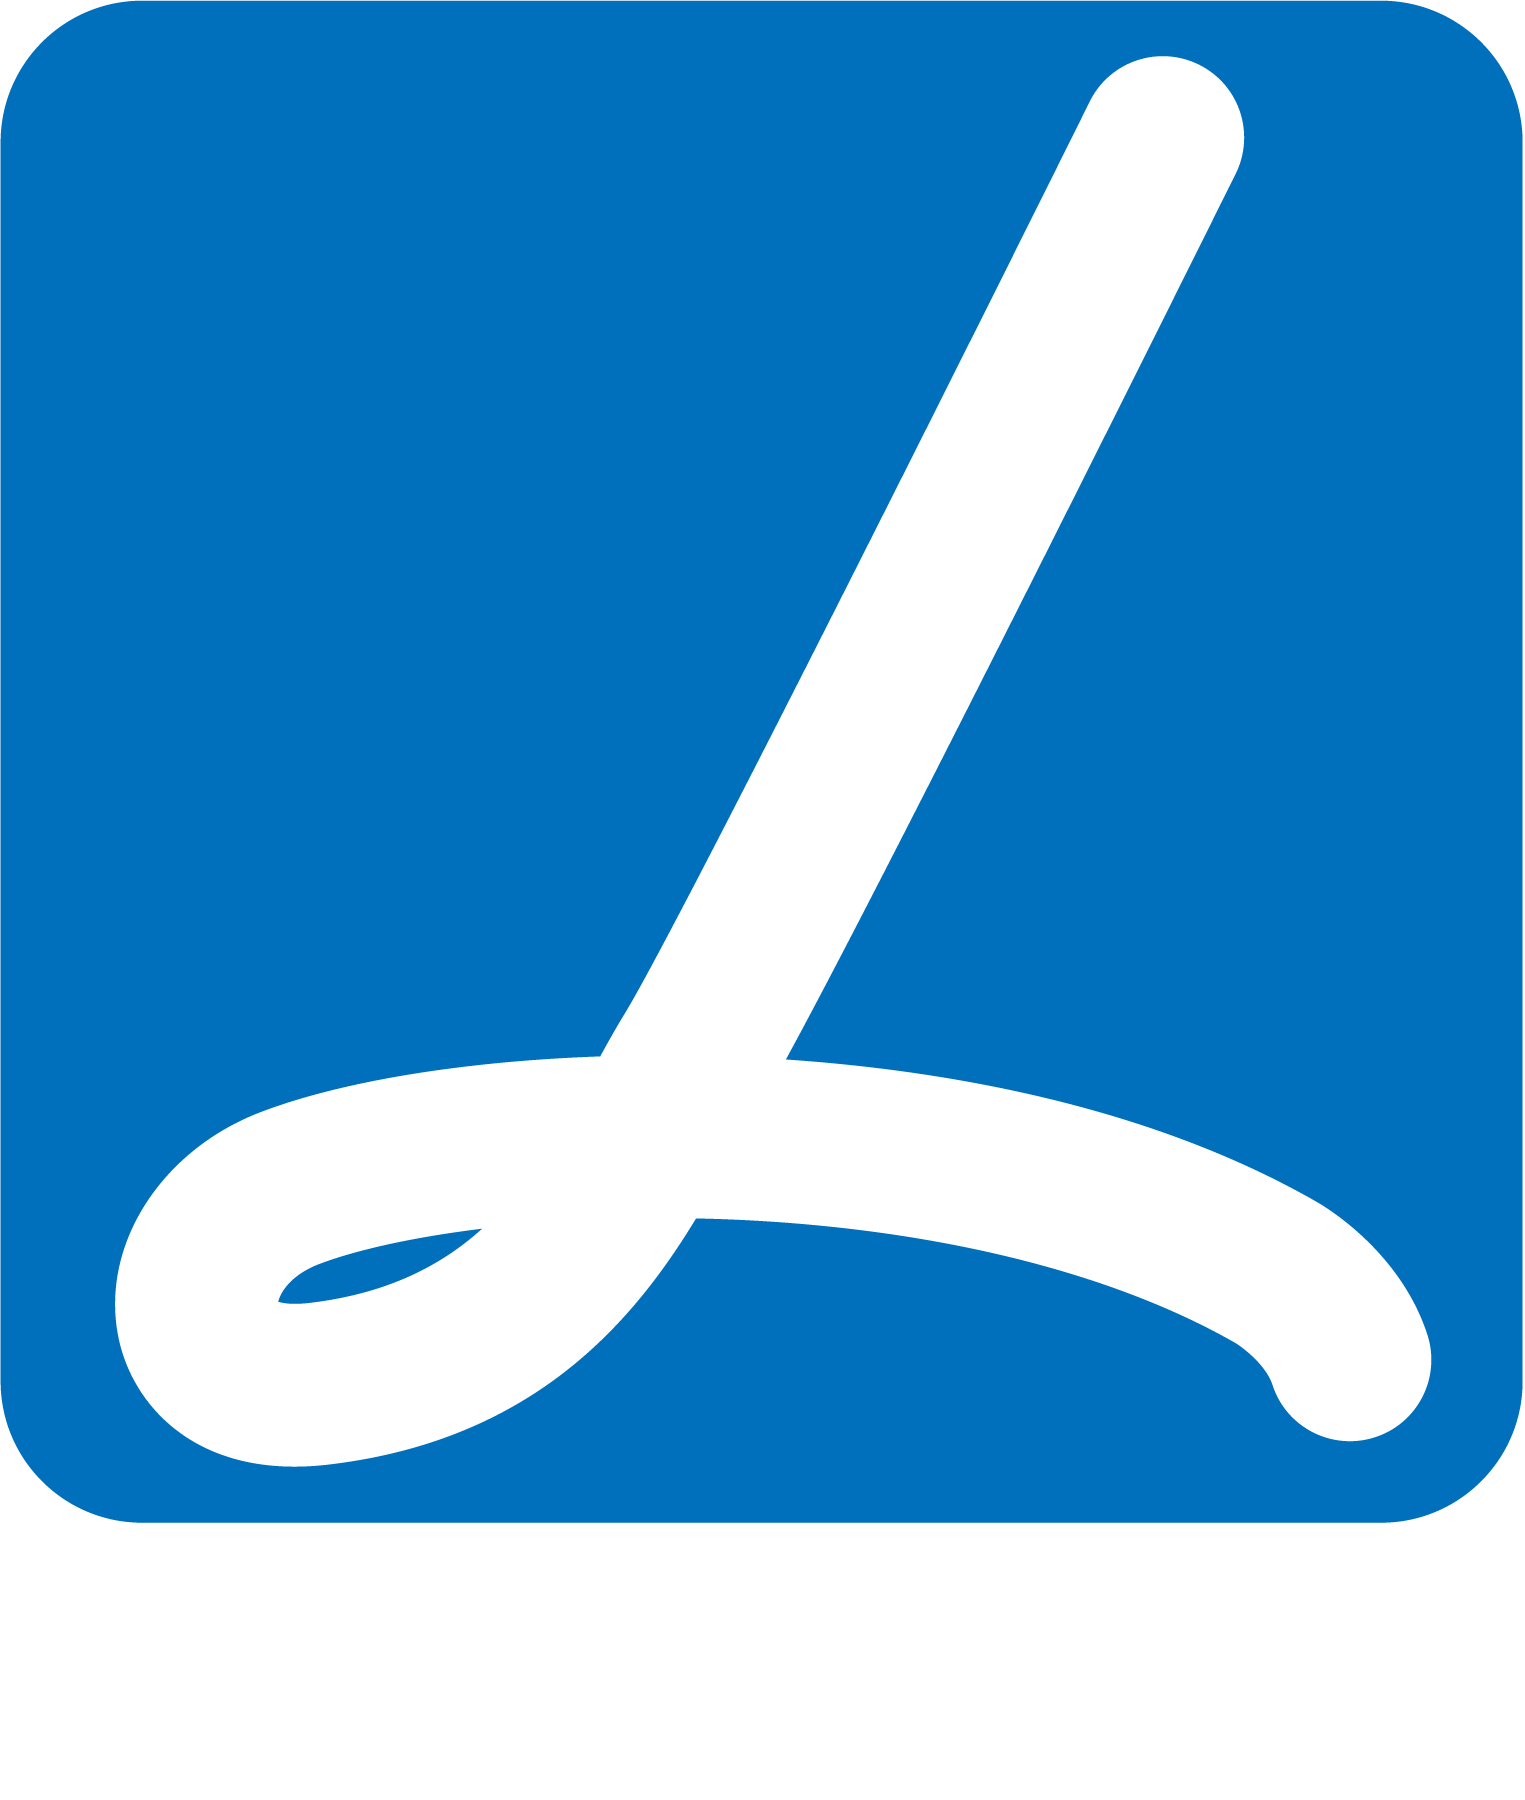 logo-pme-lider